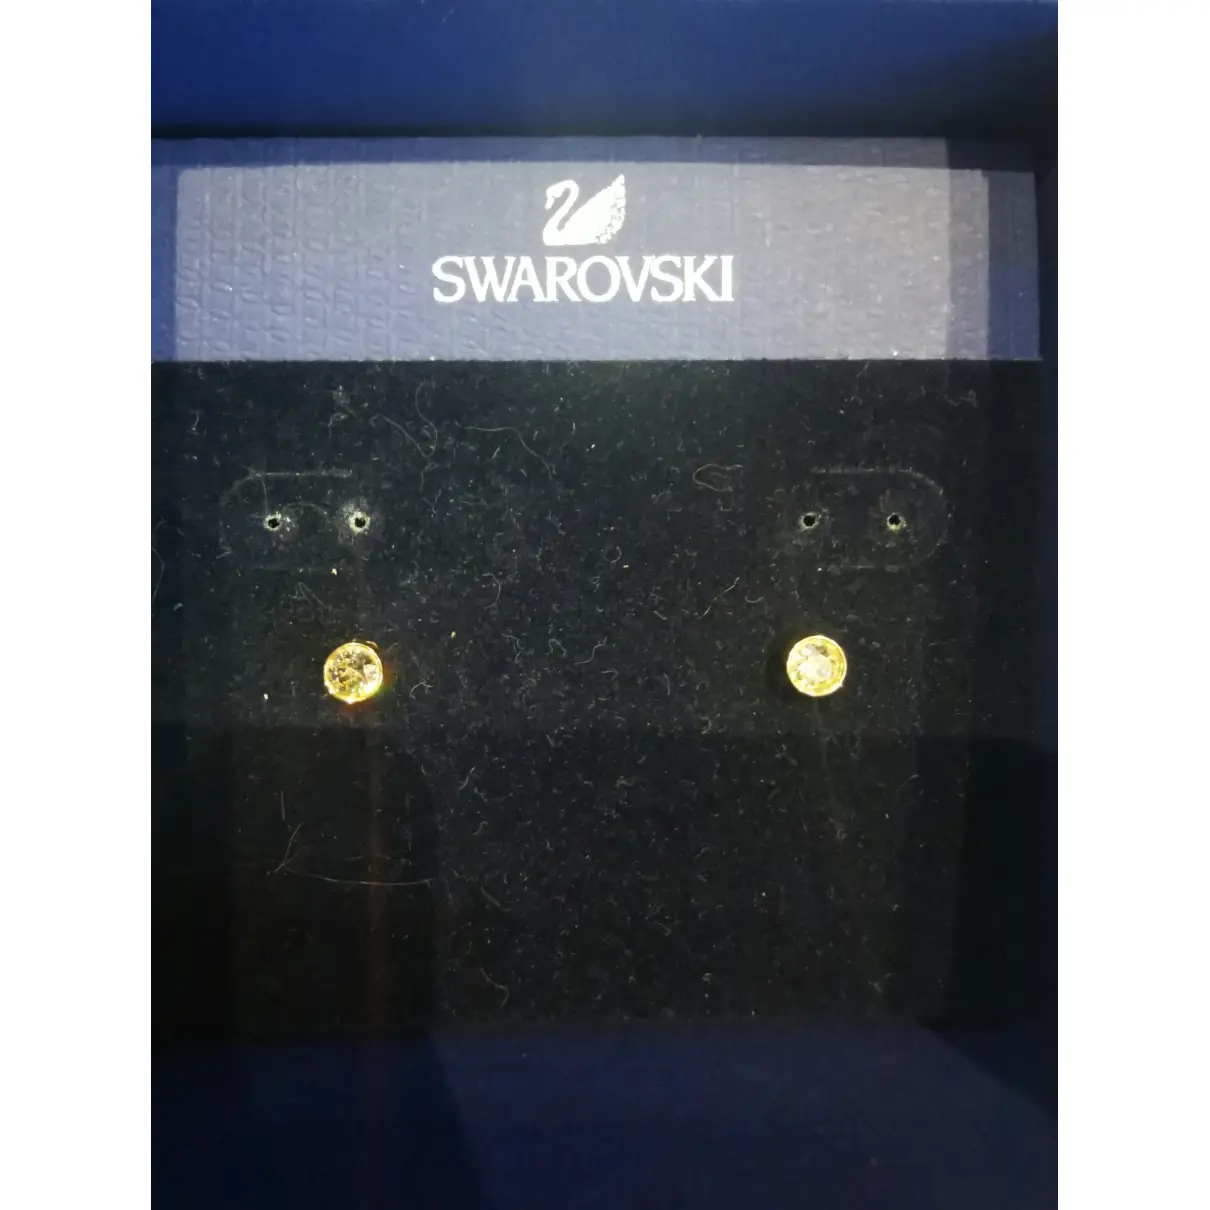 Buy Swarovski Earrings online